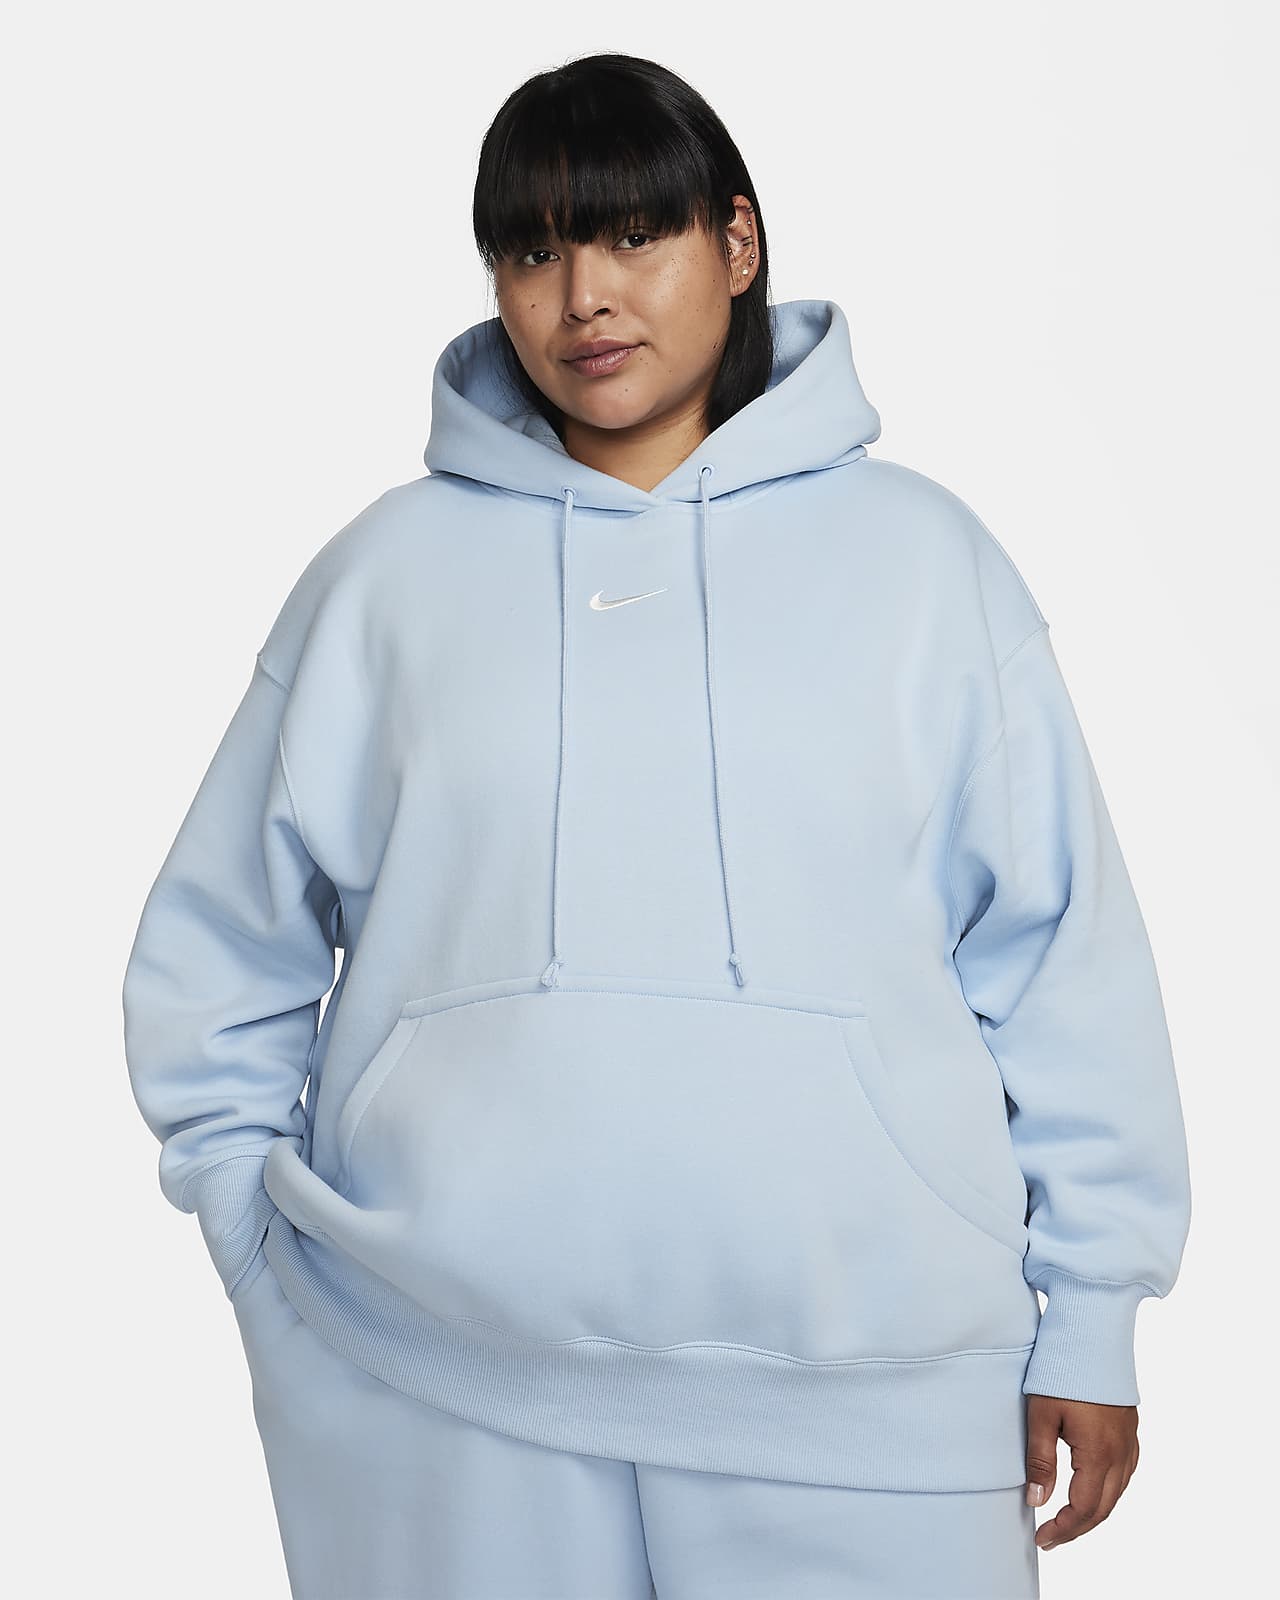 Your Custom Text Here Sweatshirt, Oversized Hoodie For Women Plus